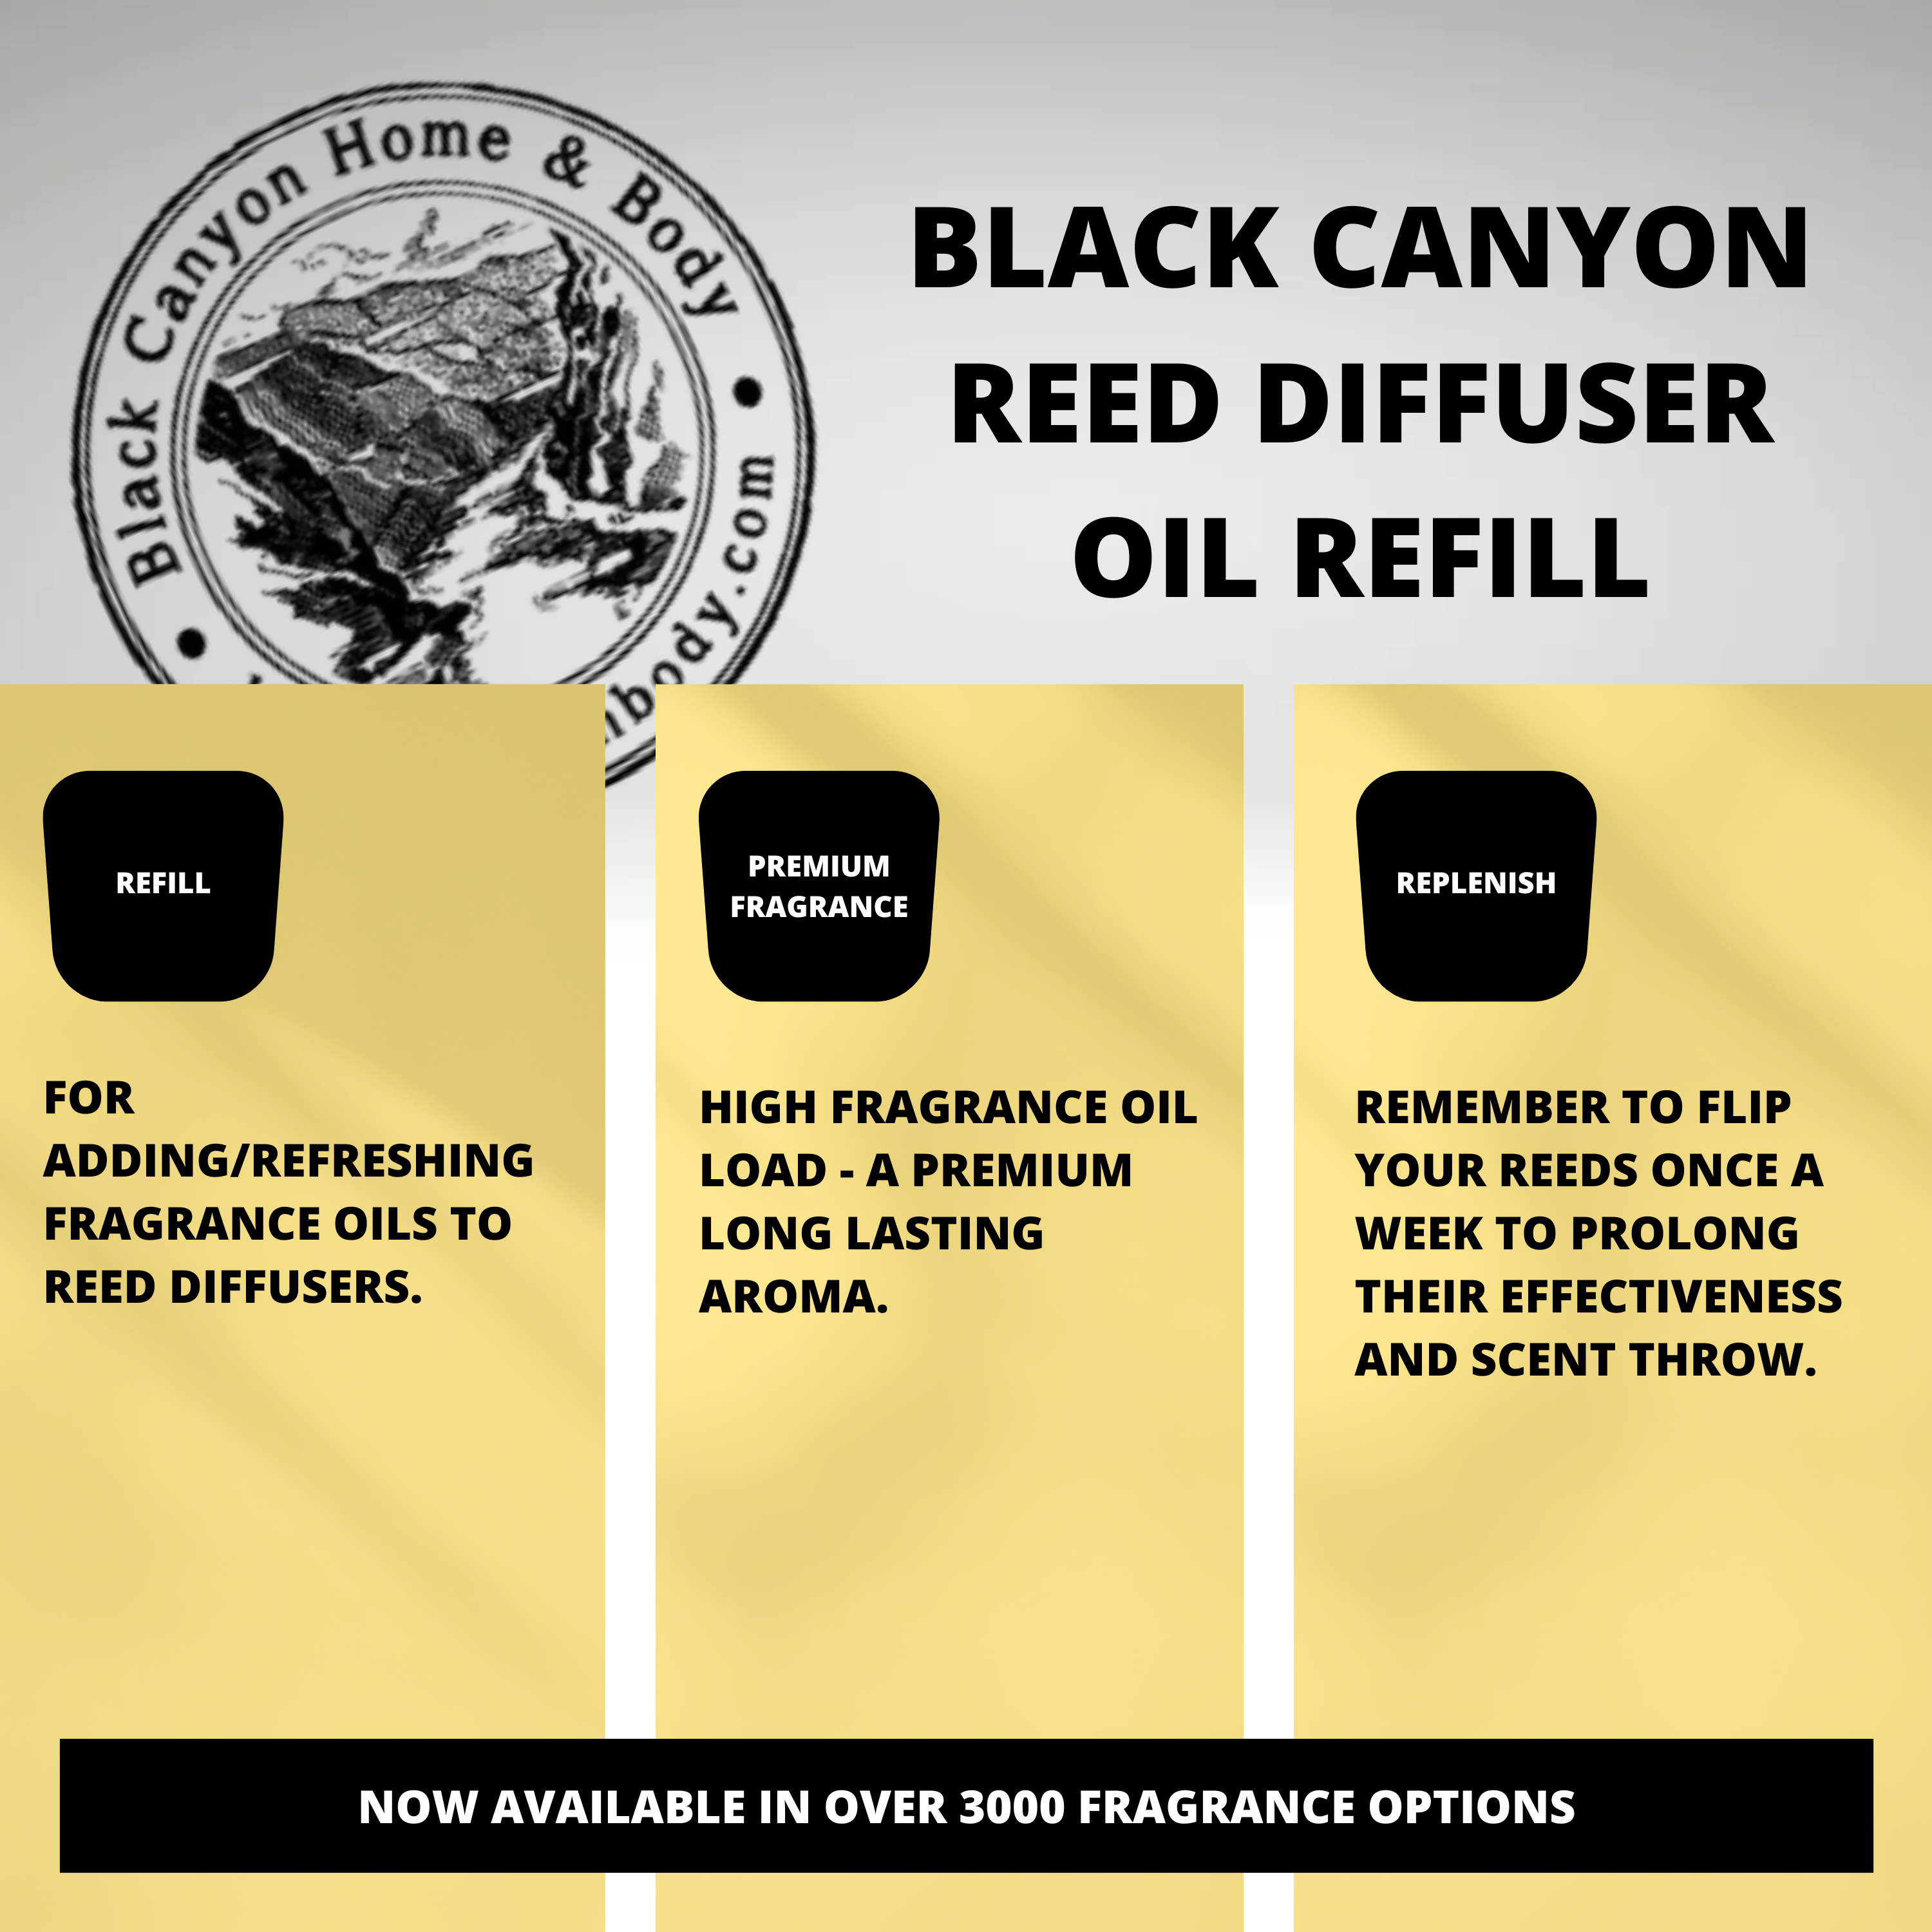 Black Canyon Apothecary Lemon Verbena Scented Reed Diffuser Oil Refill